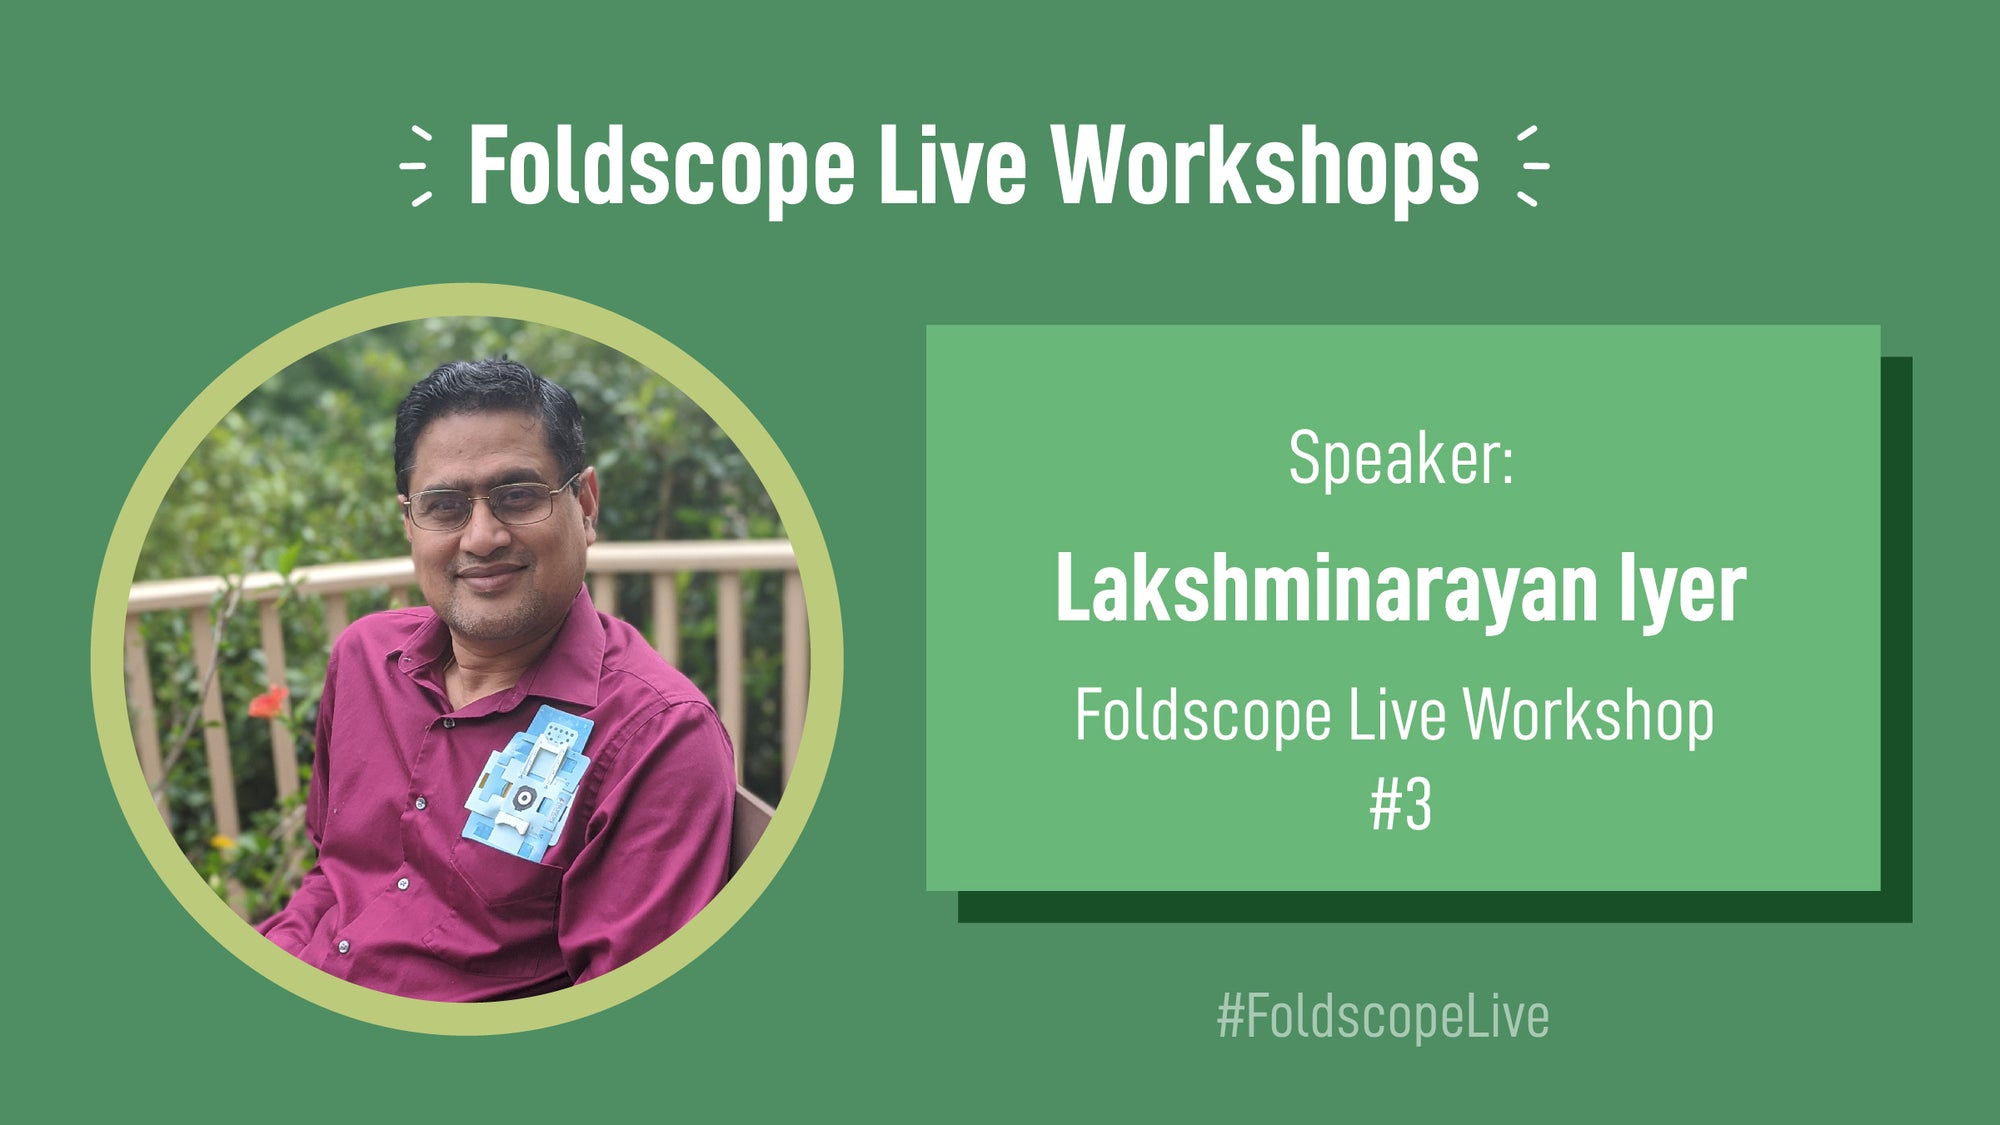 Lakshminamarayan Iyer Explores The Tree Of Life Using A Foldscope